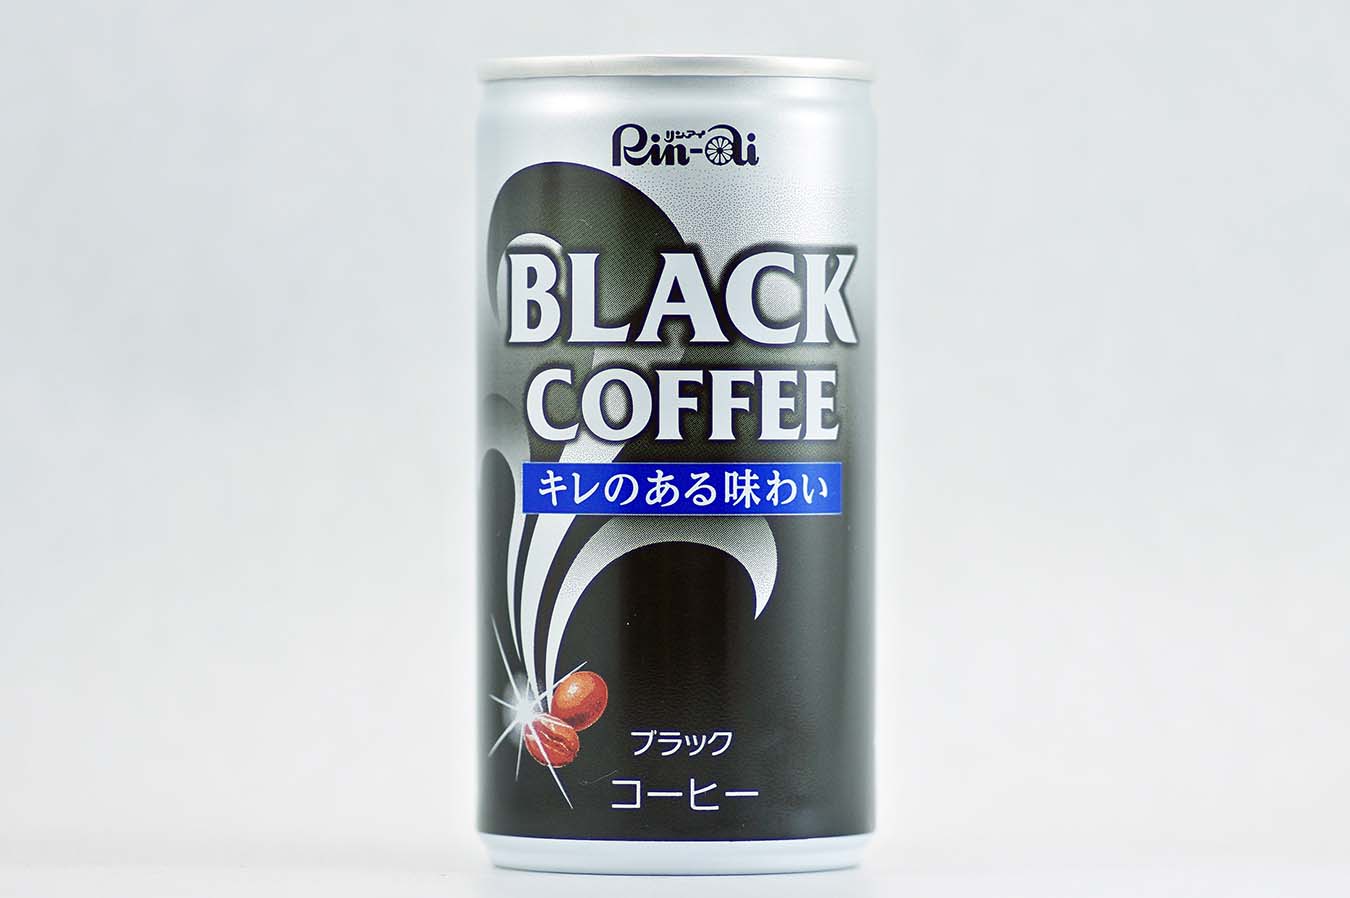 Rin-ai ブラックコーヒー 2015年8月